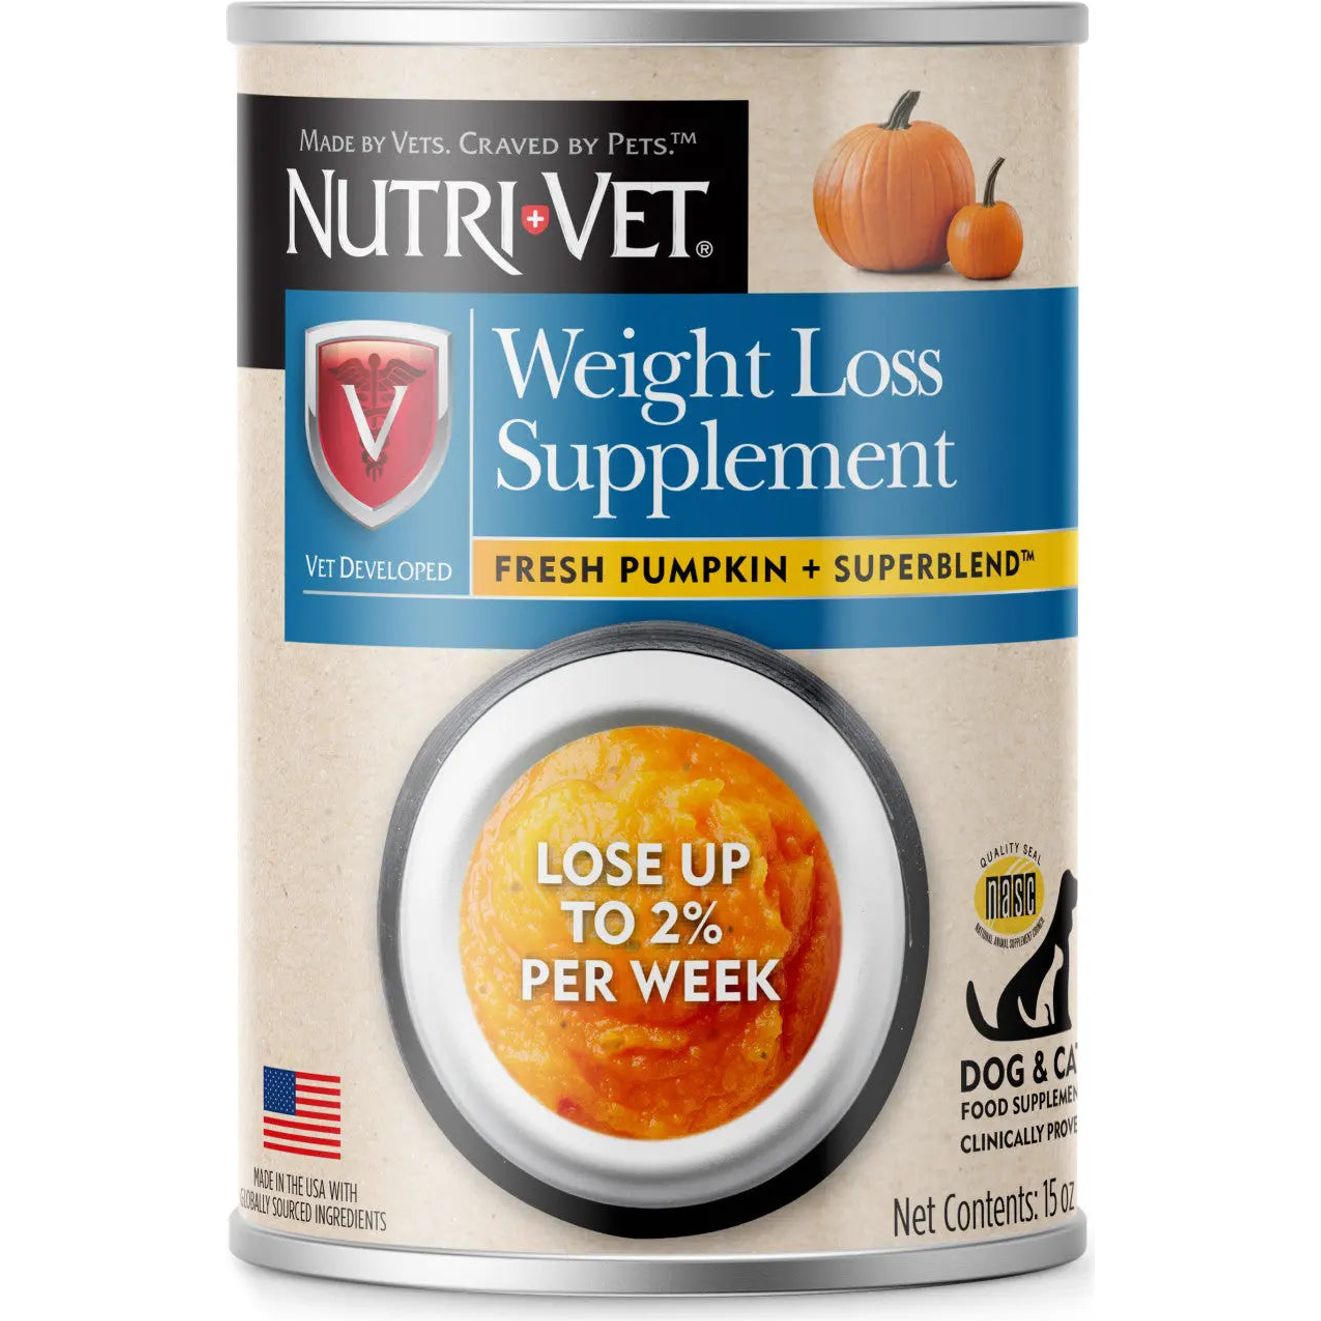 Nutri-Vet Weight Loss Supplement Fresh Pumpkin & Superblend 15oz Nutri-Vet